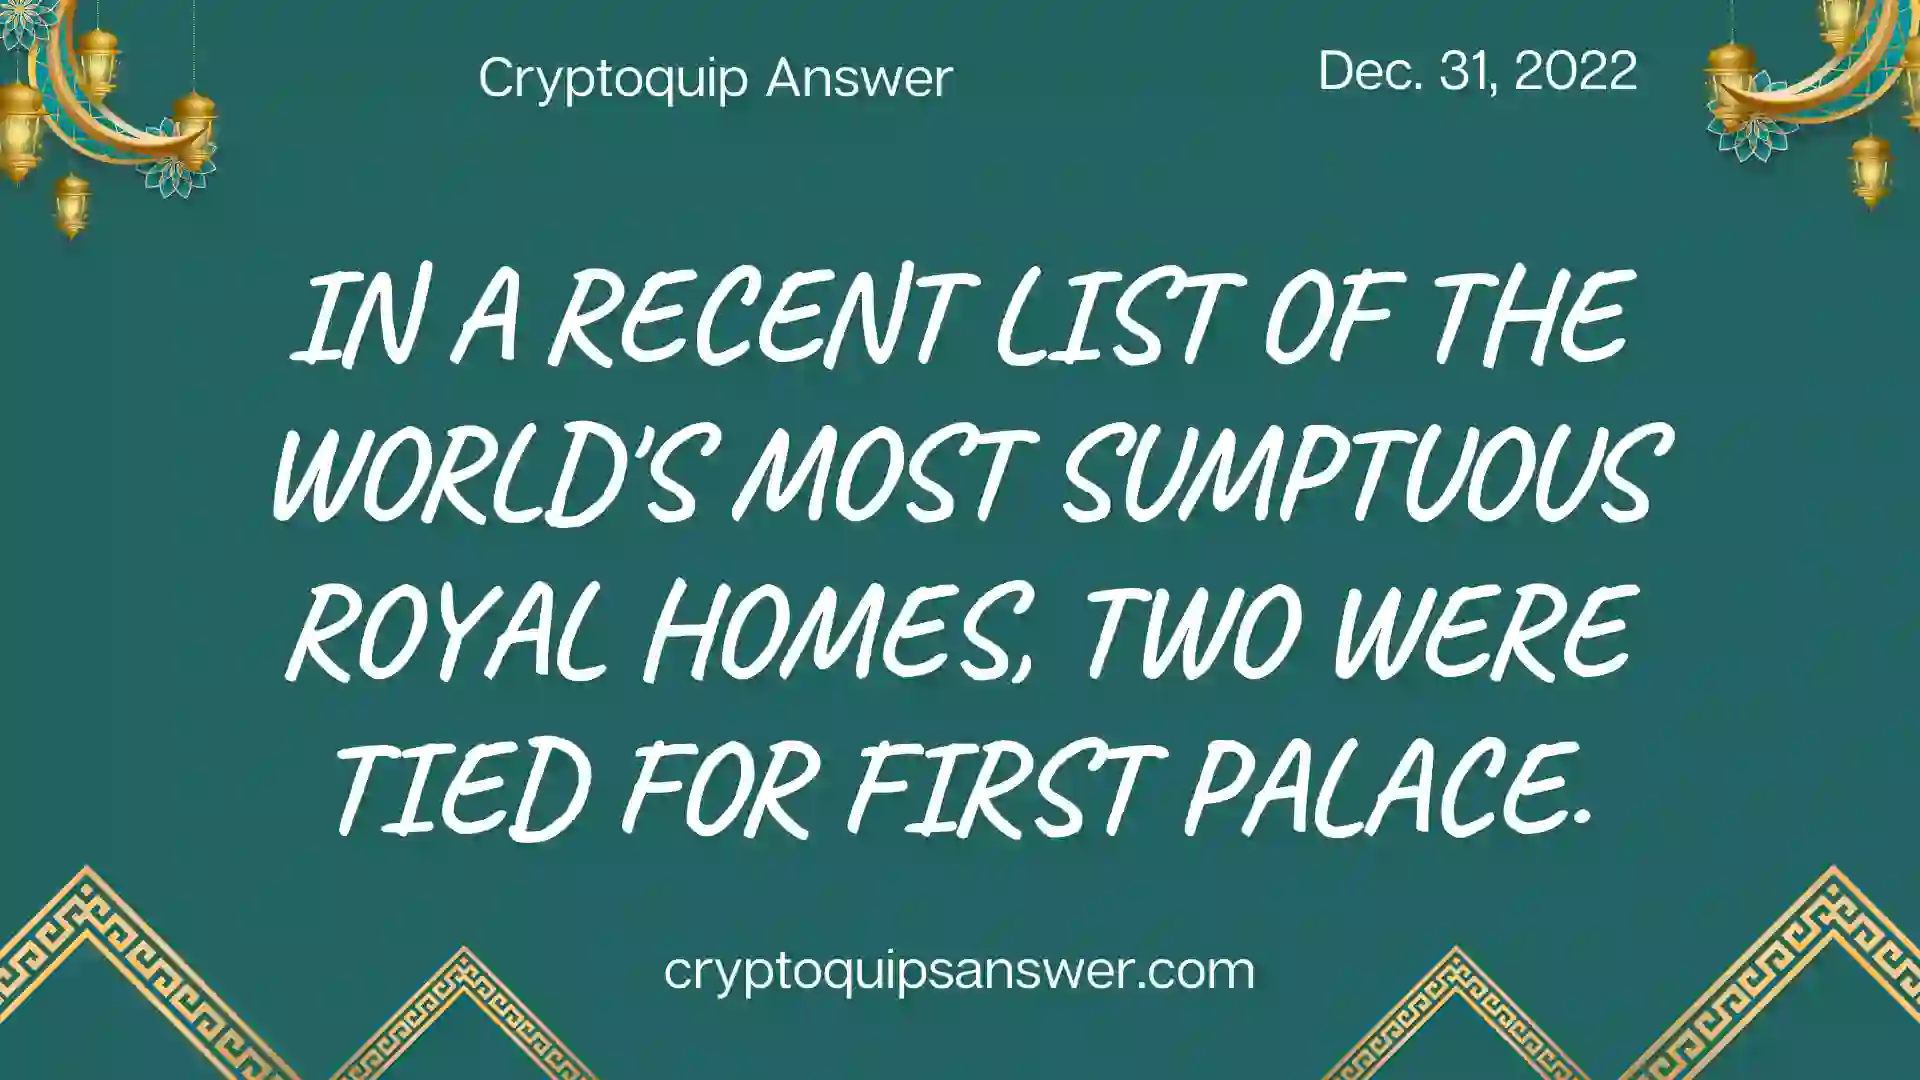 cryptoquip answer december 31, 2022